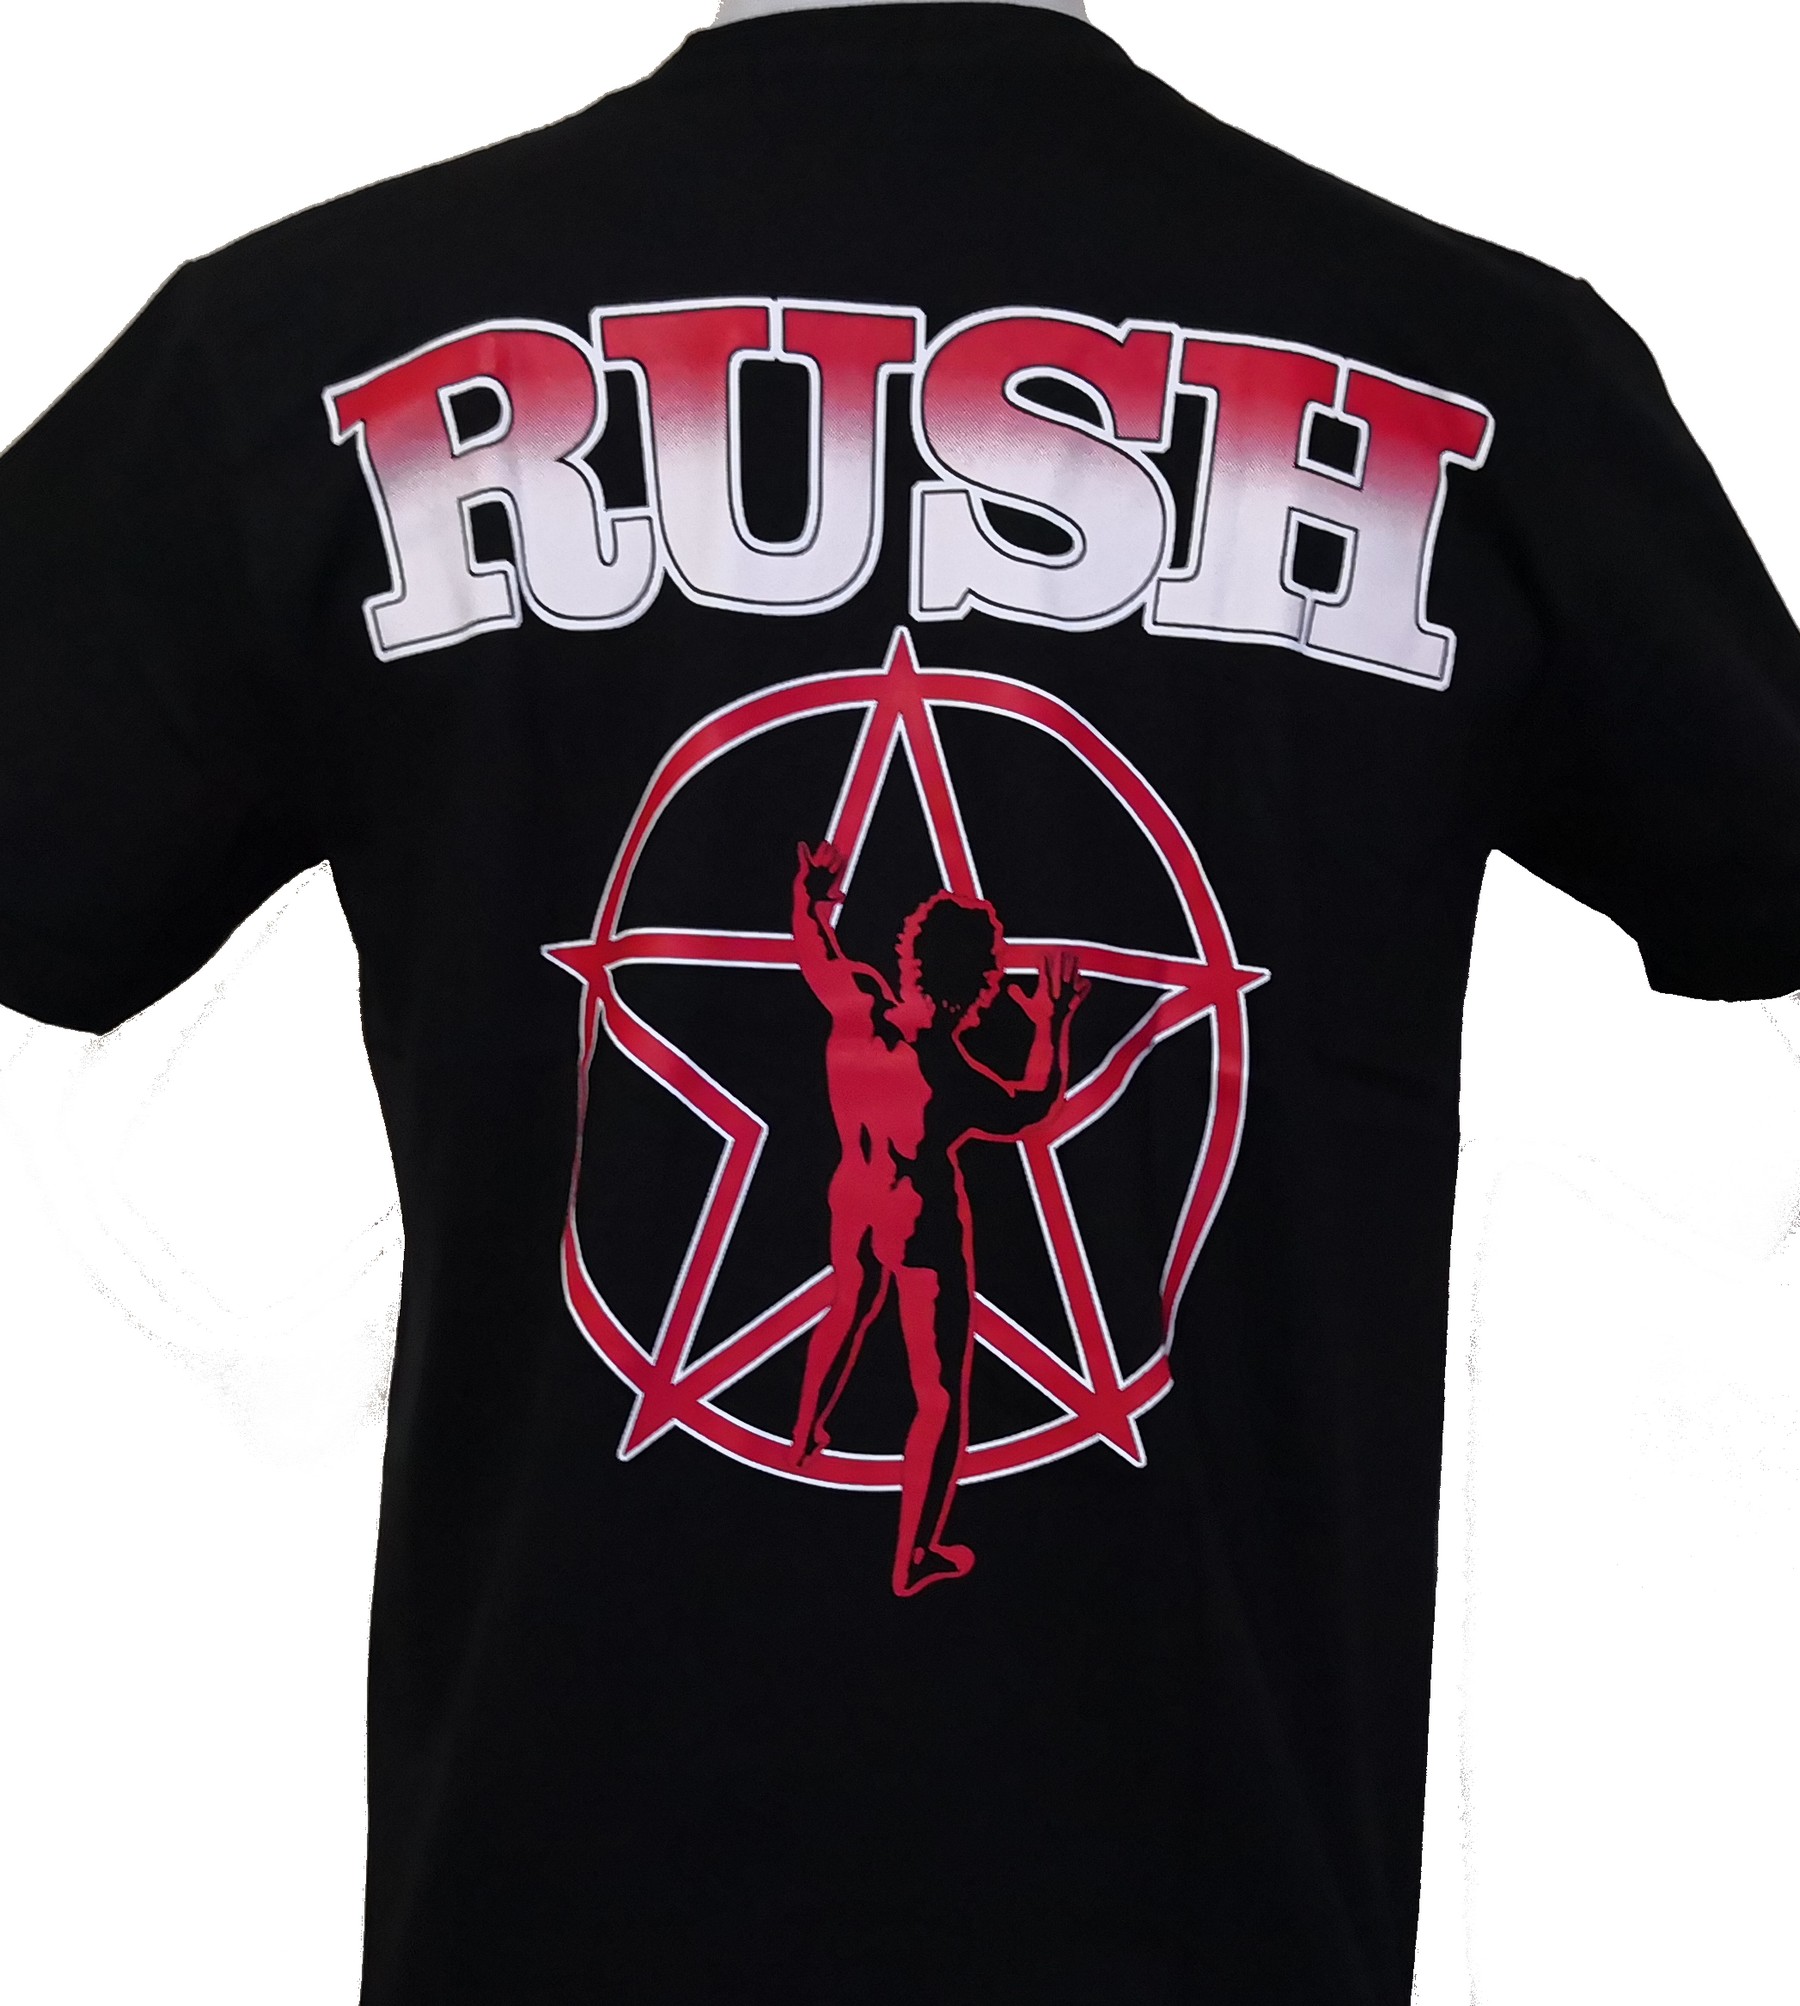 size Rush t-shirt – S RoxxBKK